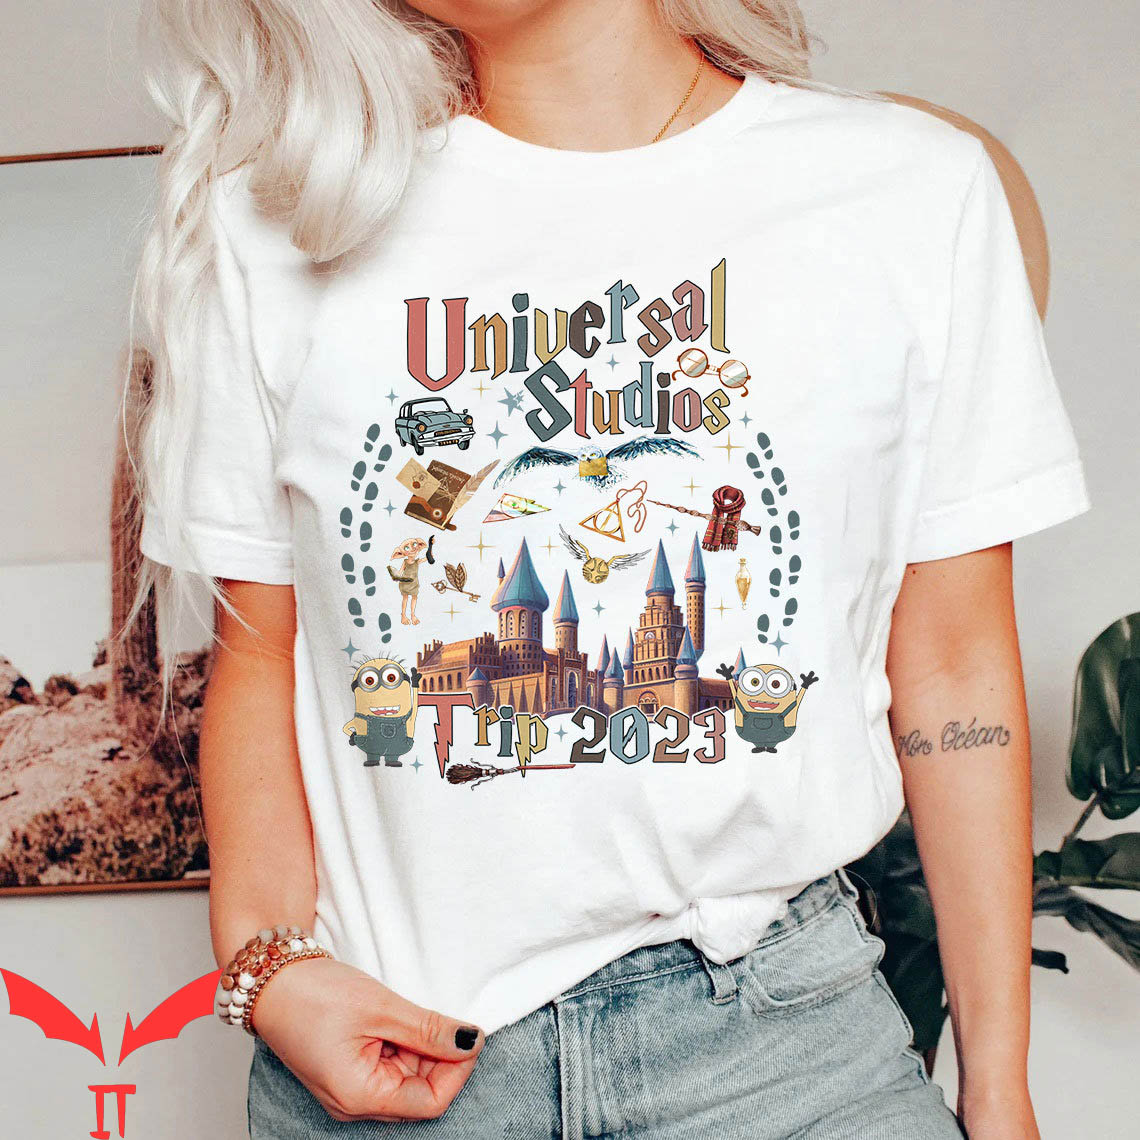 Vintage Universal Studios T-Shirt Trip Vacation Disney